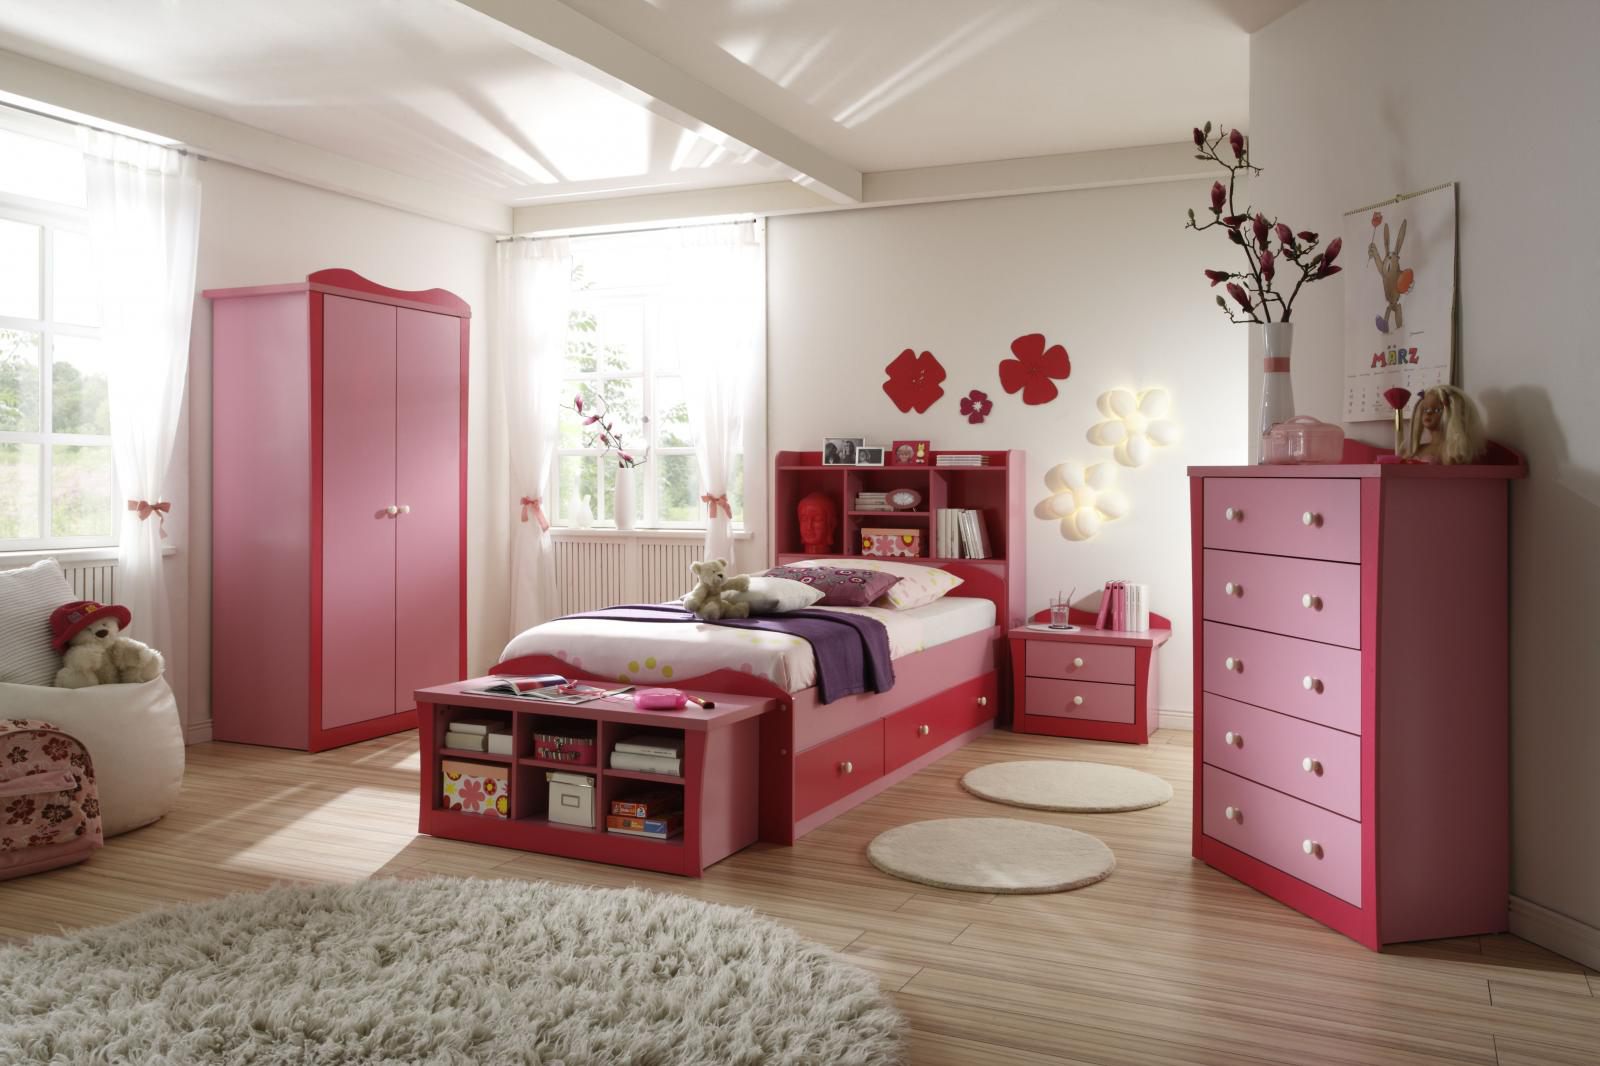 Cute Bedroom Ideas For Teenage Girls Best Interior Design S